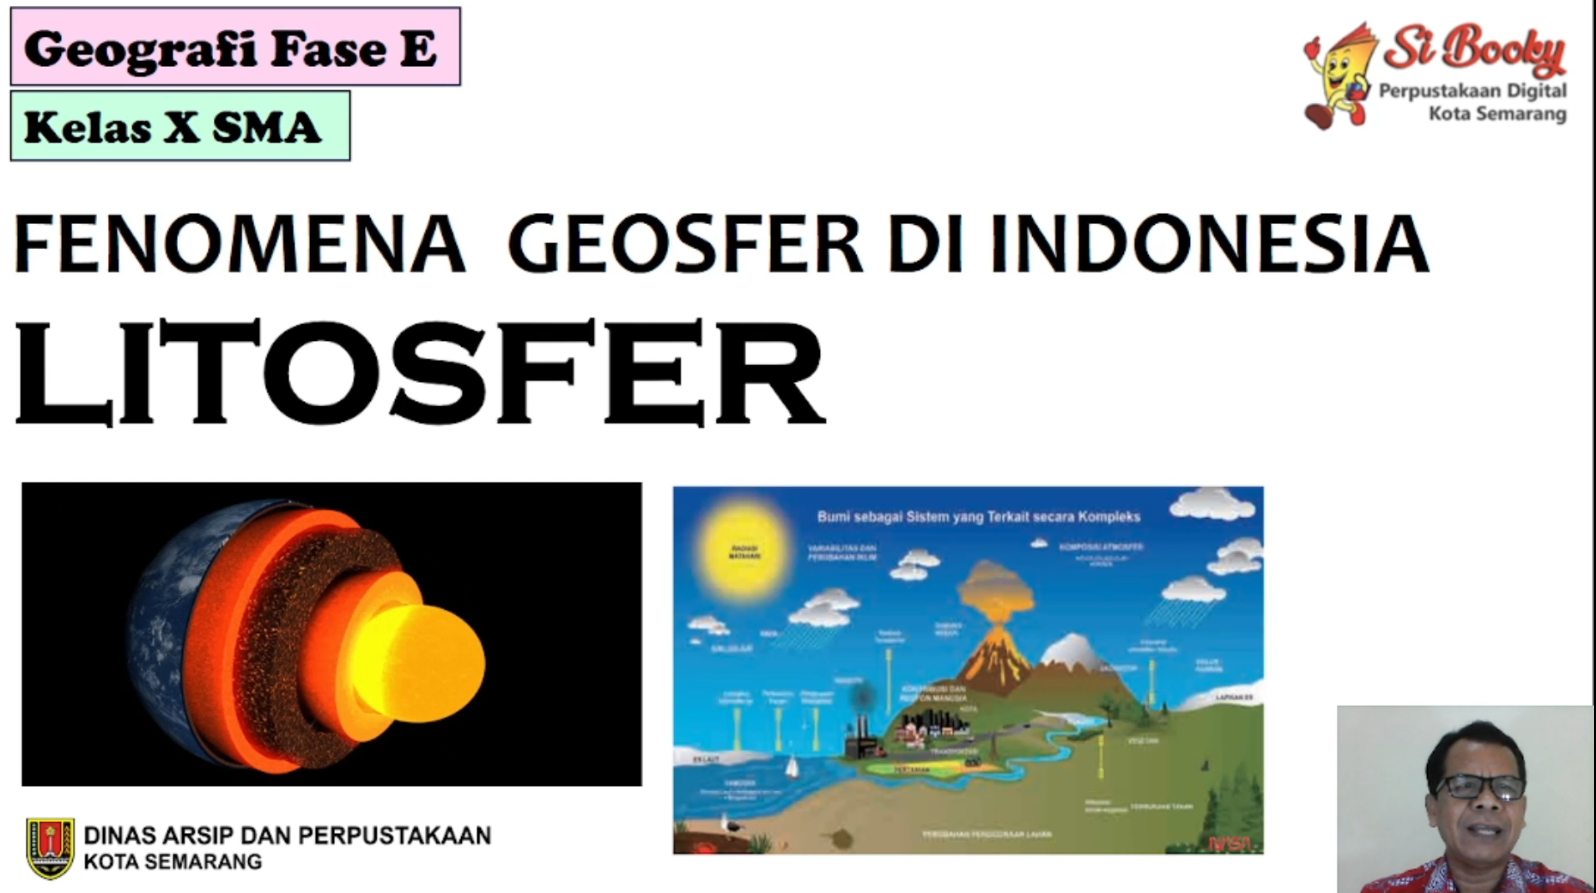 SMA KELAS X Geografi Fase E : Fenomena Geosfer Di Indonesia "LITOSFER"